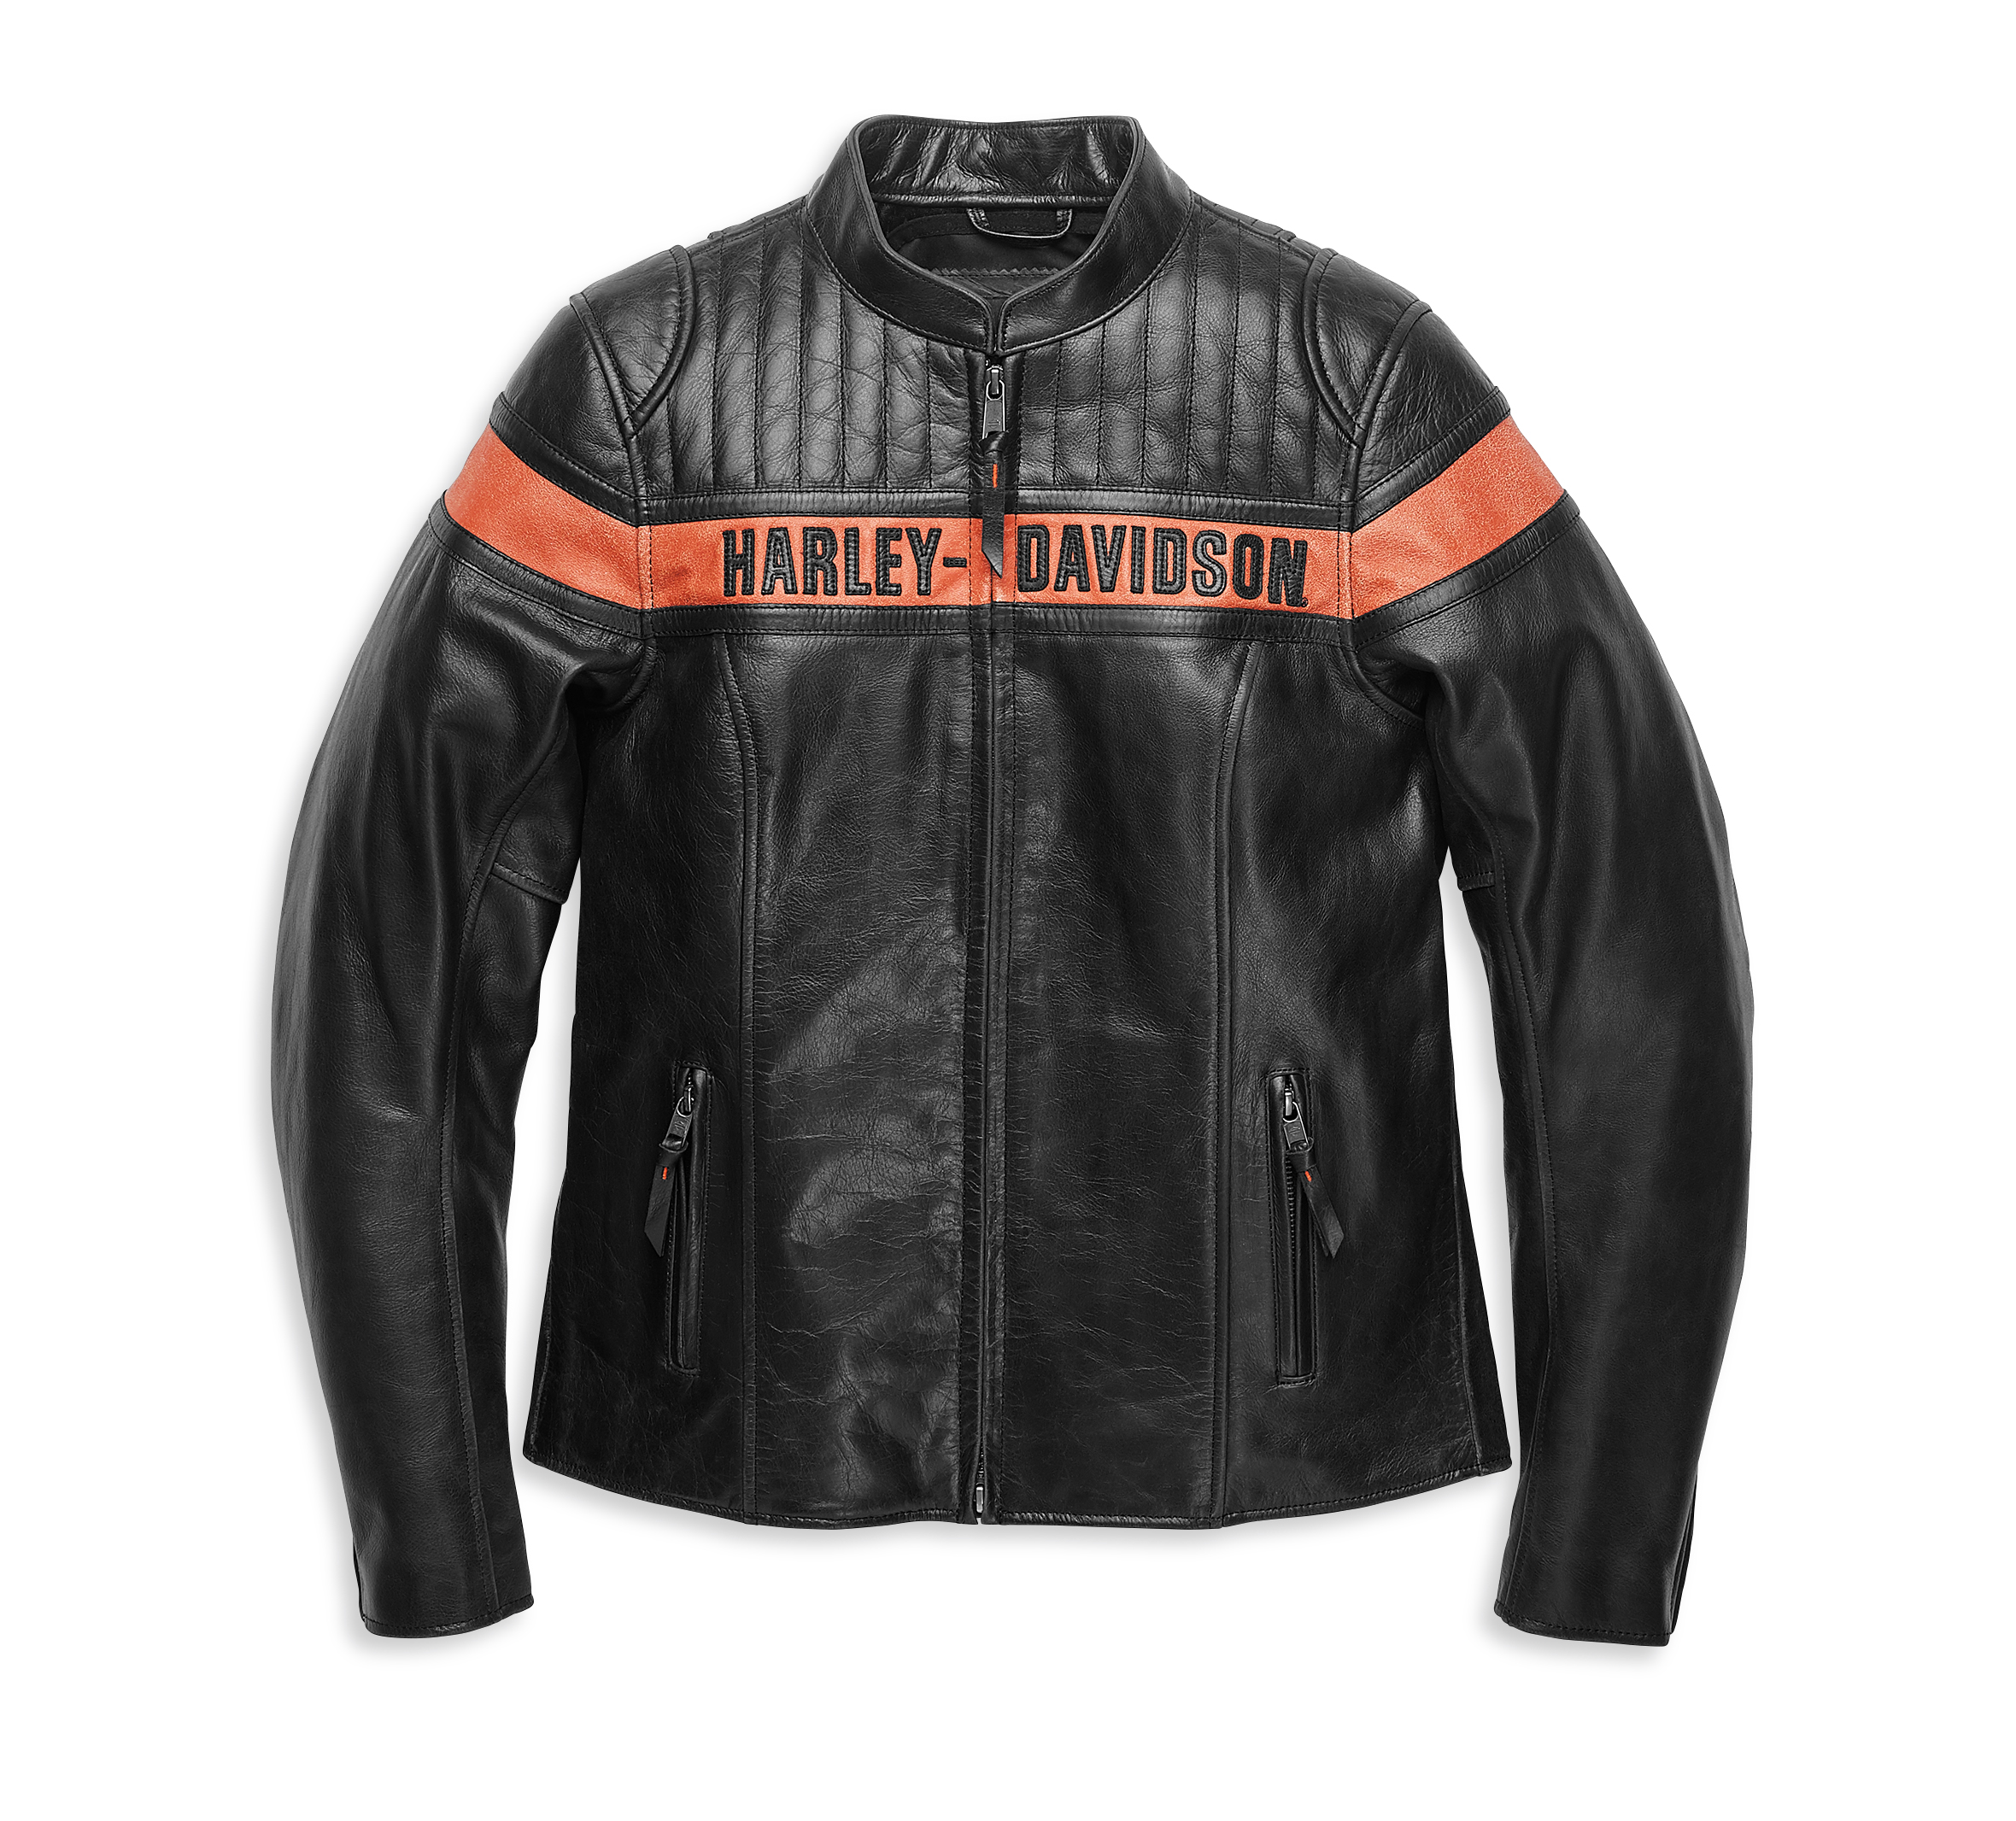 Buy Women's Red Genuine Leather Motorcycle Jacket Women's Online